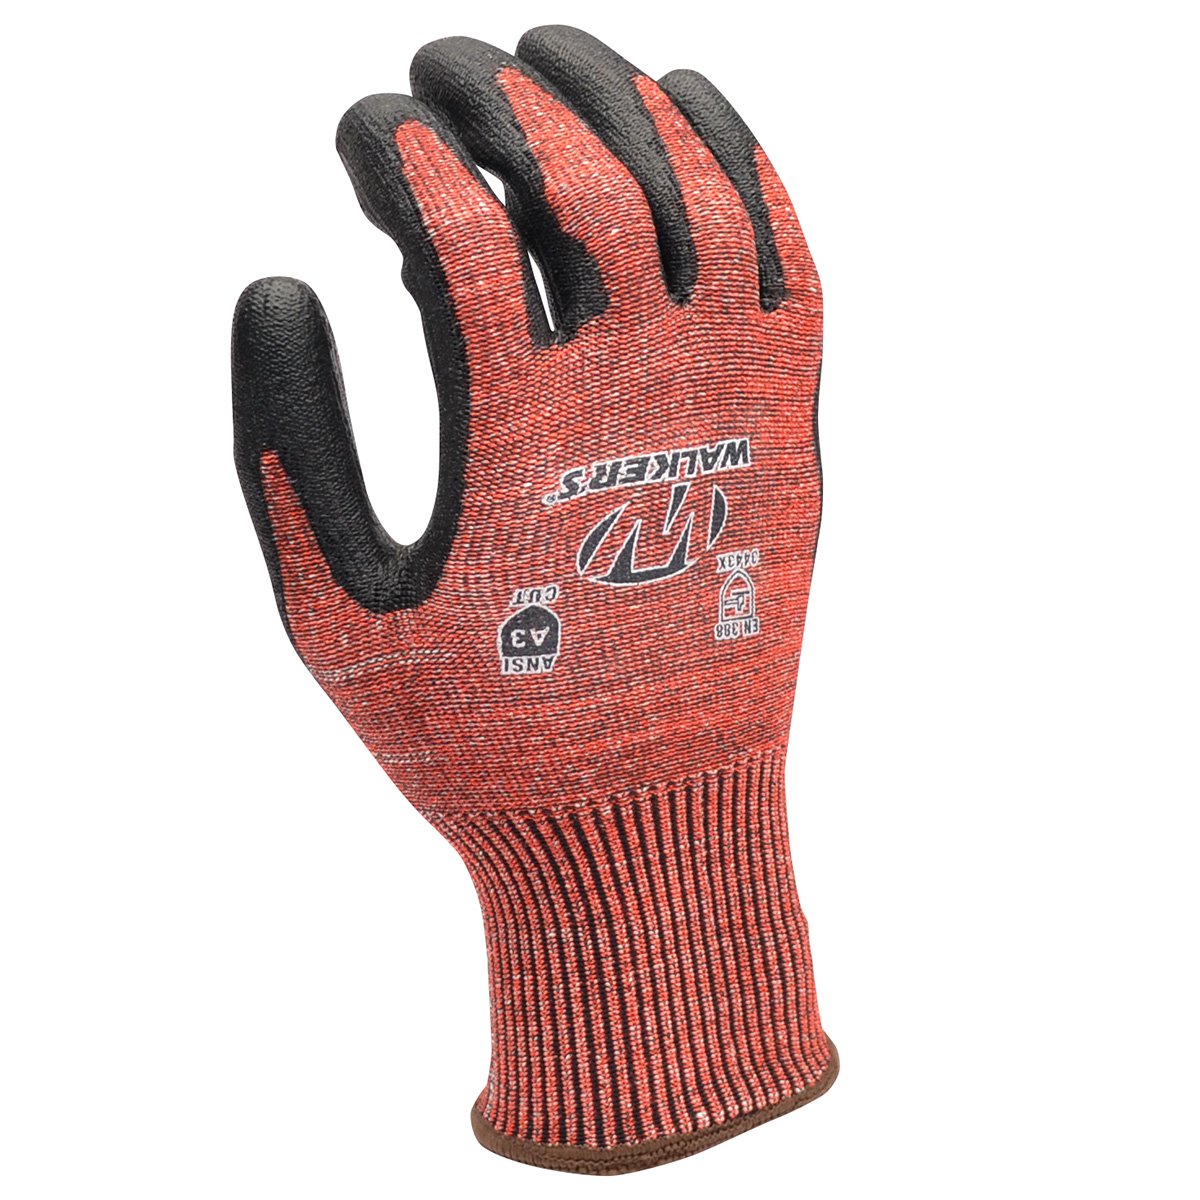 A3 Cut Resistant Gloves - Walker's